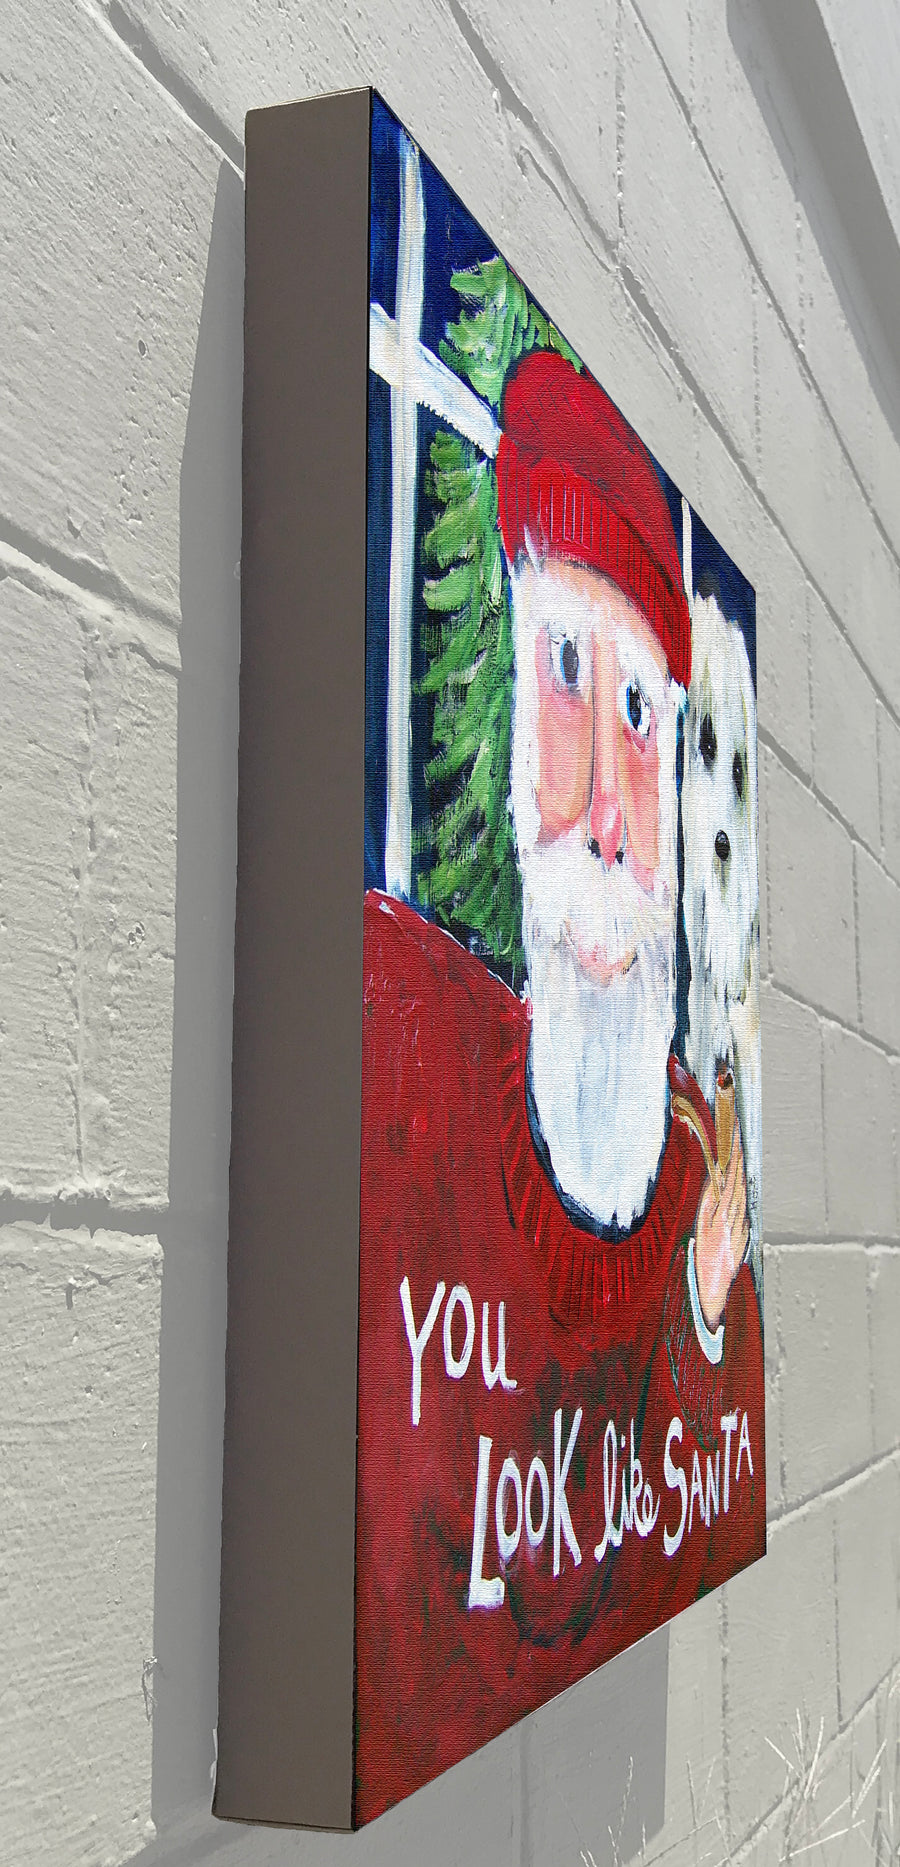 GALLERY GRAND - You and Santa Series - You Look Like Santa